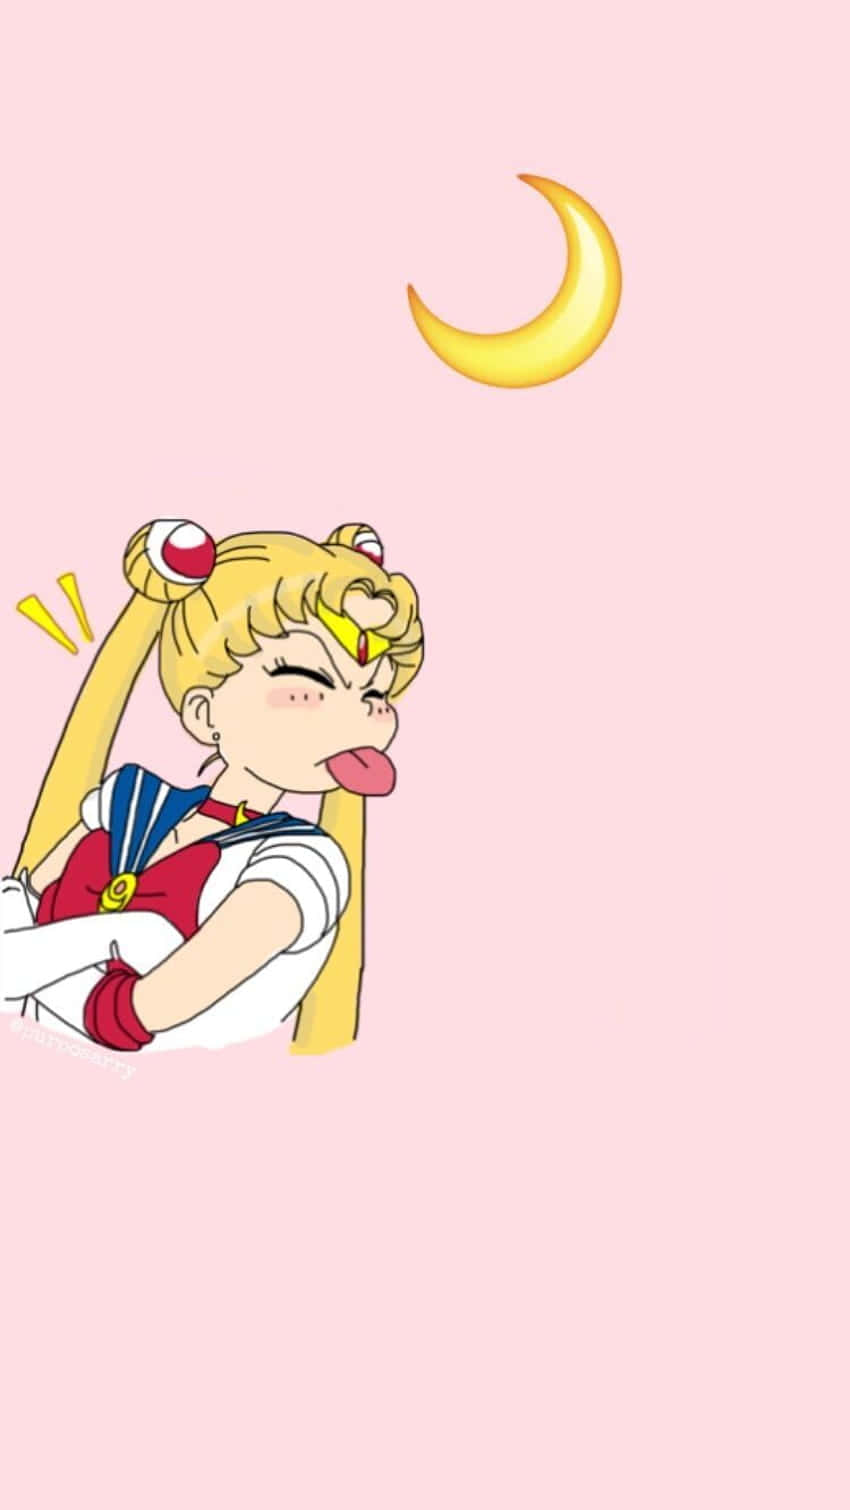 Magical Girl Usagi Tsukino Transforming Into the Legendary Sailor Moon